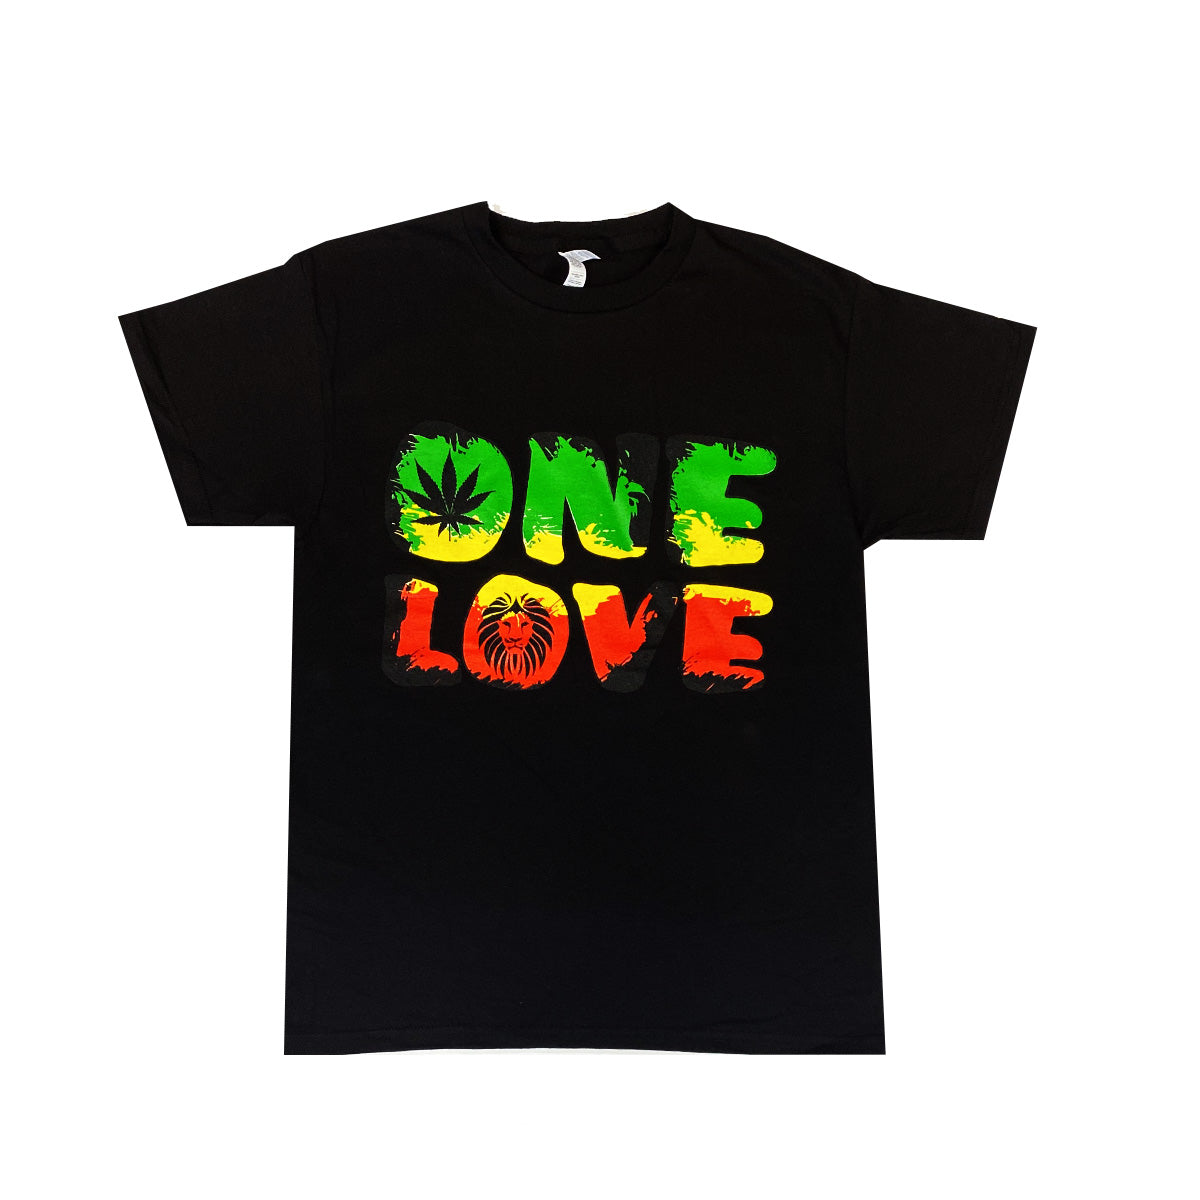 One Love 100% Cotton T-Shirt, Pack of 5 Units, M, L, XL, XXL, XXXL